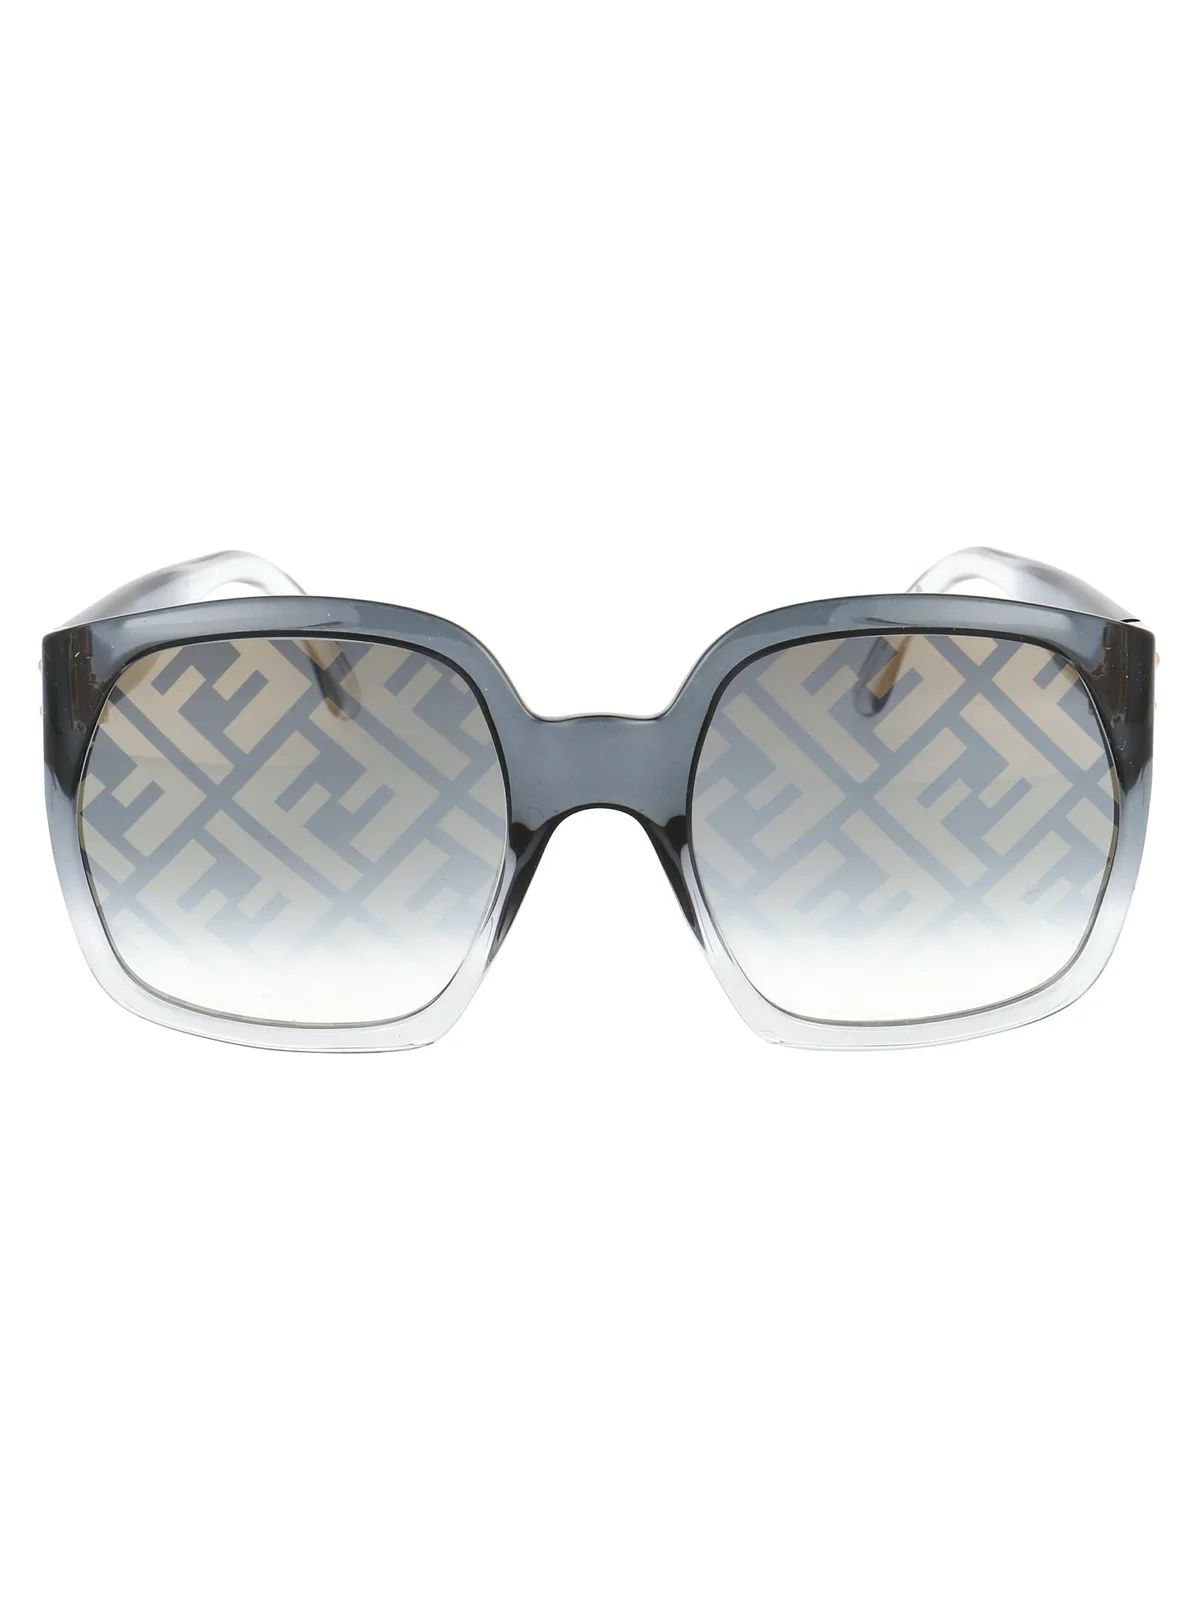 Fendi Eyewear Oversized Square Frame Sunglasses | Cettire Global